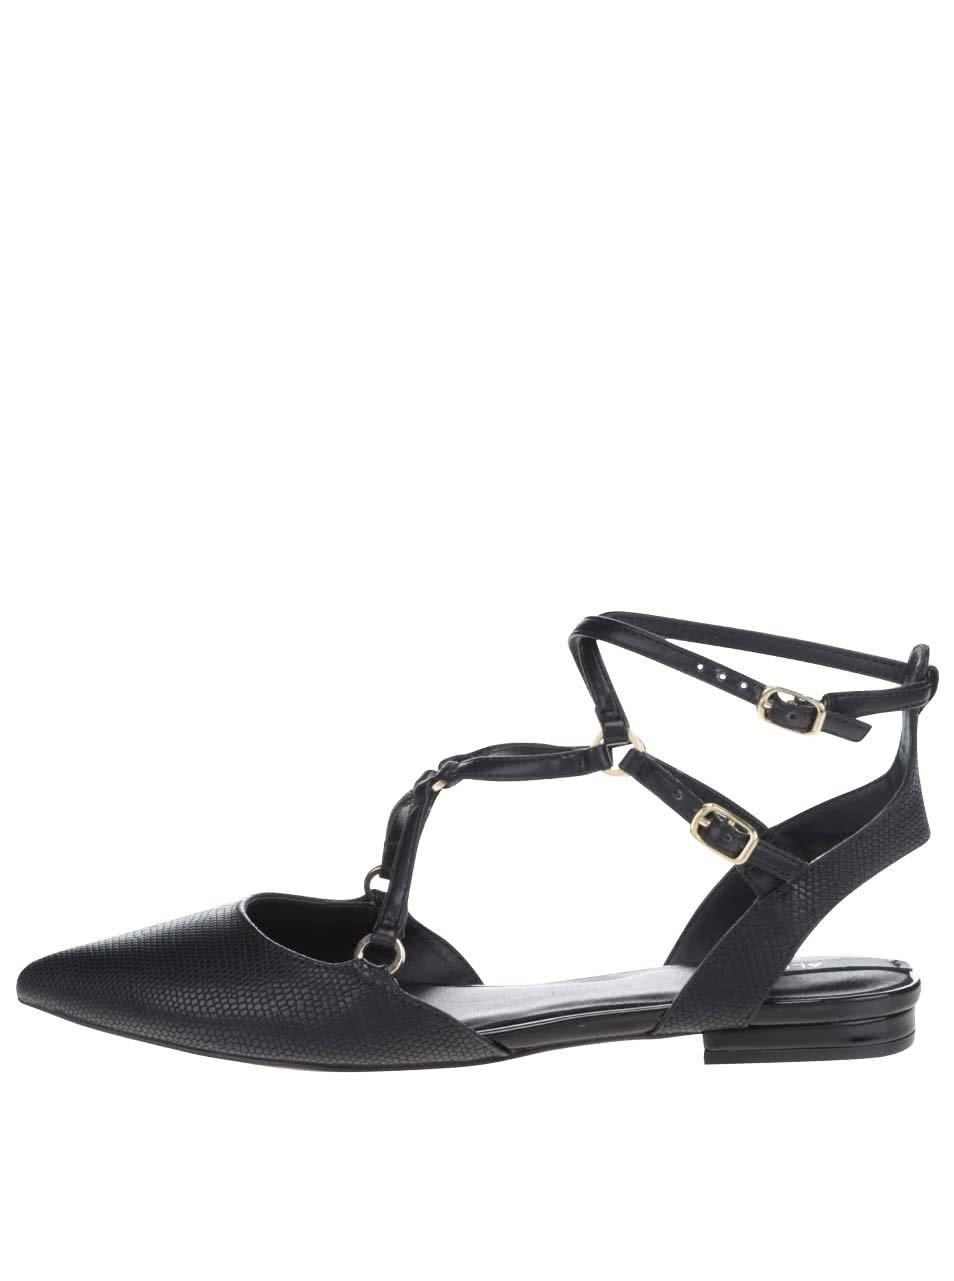 Černé sandálky s ozdobným páskem ALDO Eddiva